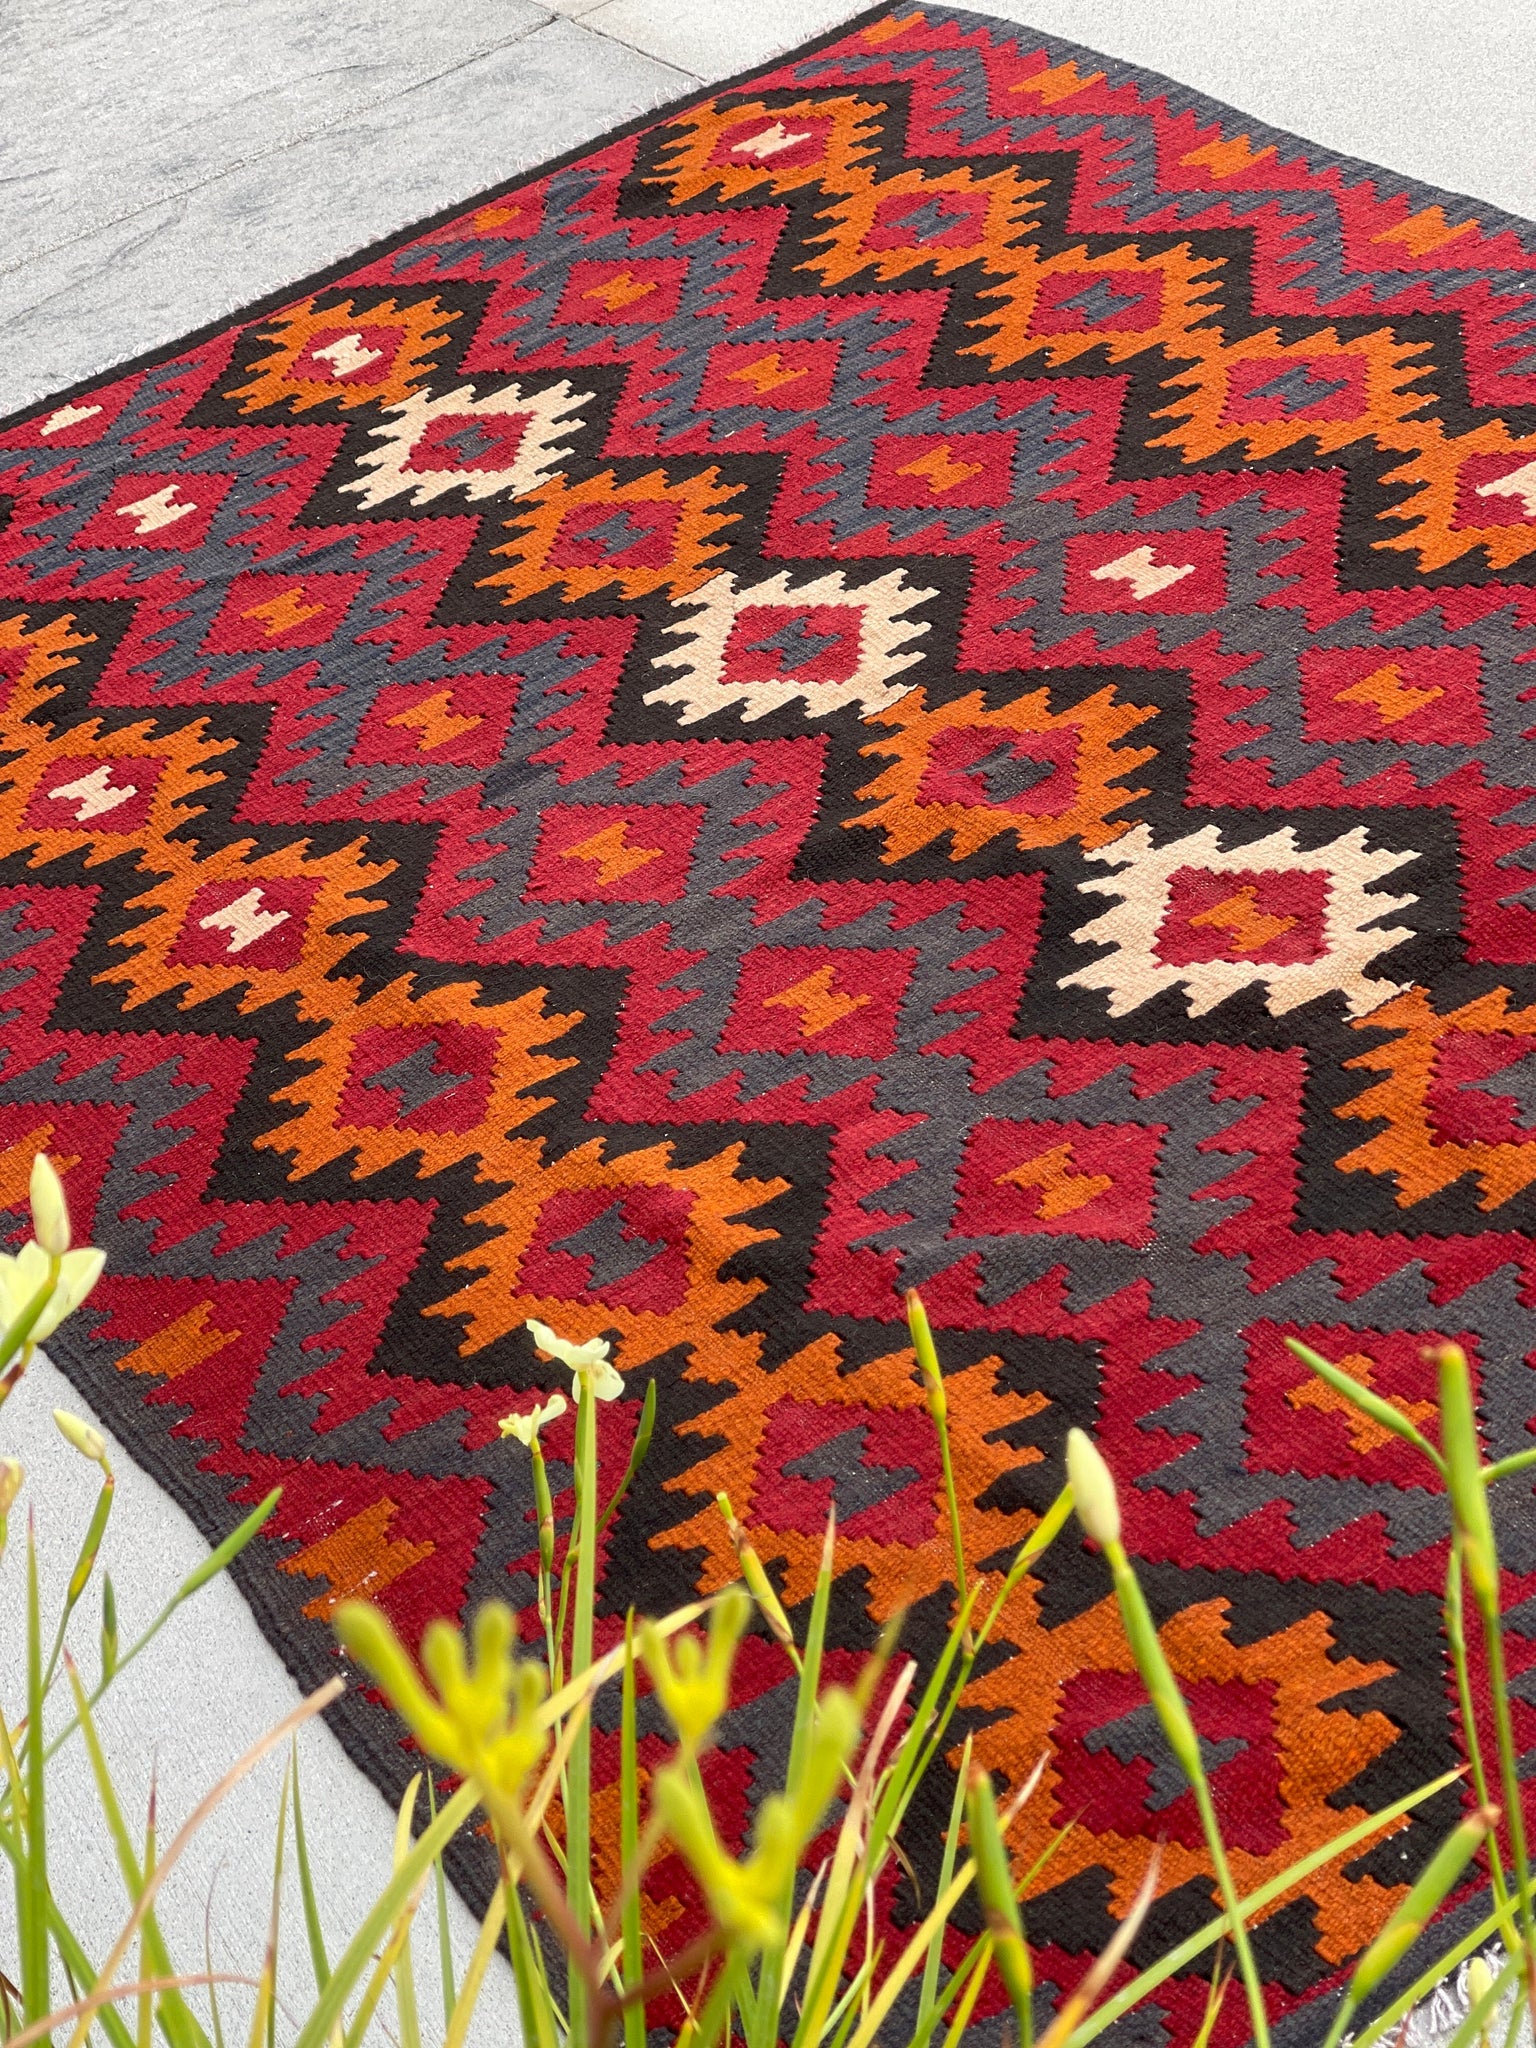 5x9 (150x275) Handmade Afghan Kilim Rug | Ruby Red Indigo Orange Beige | Hand Knotted Tribal Nomadic Turkish Moroccan Kilim Wool Persian